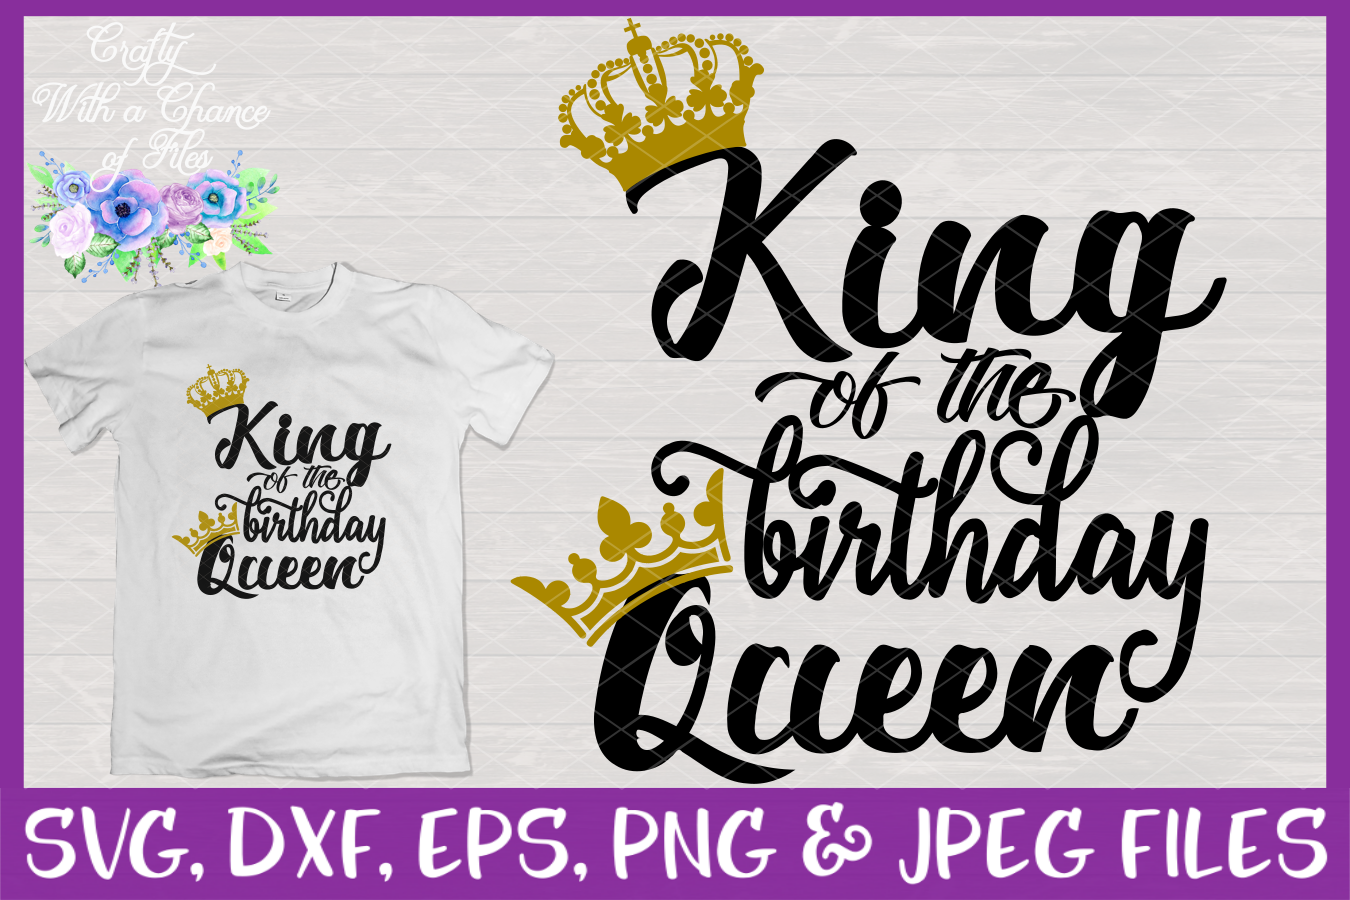 King of the Birthday Queen SVG - Men Shirt Design